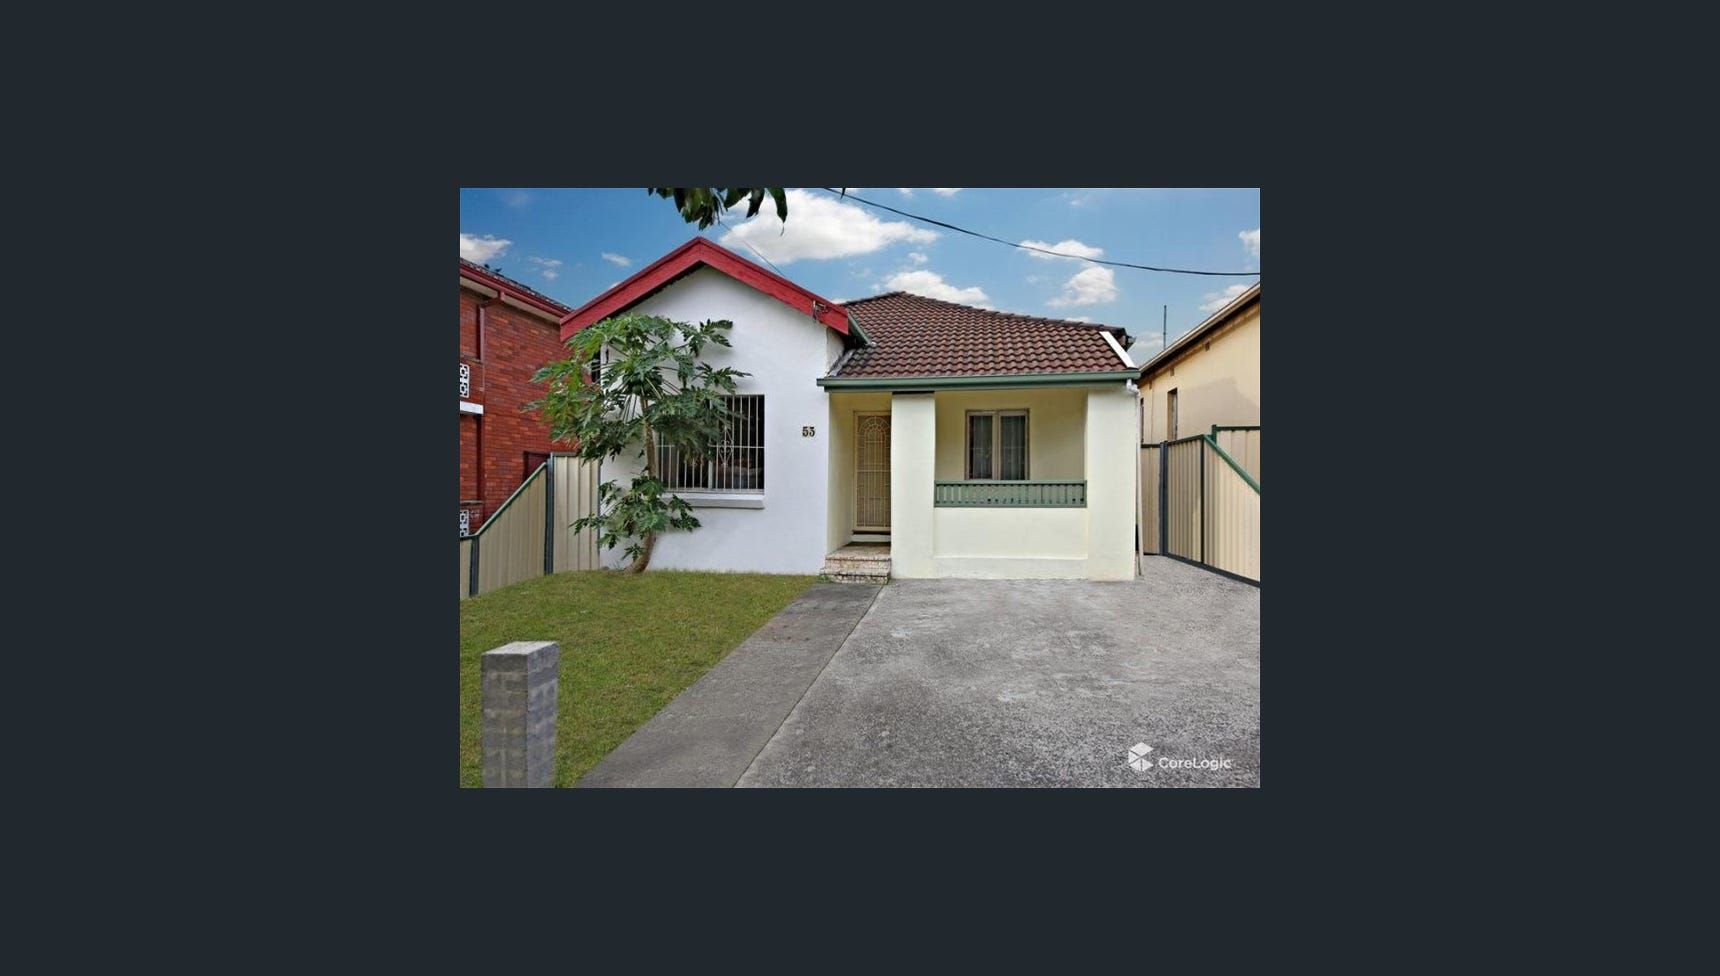 3 bedrooms House in 53 Fairmount St LAKEMBA NSW, 2195